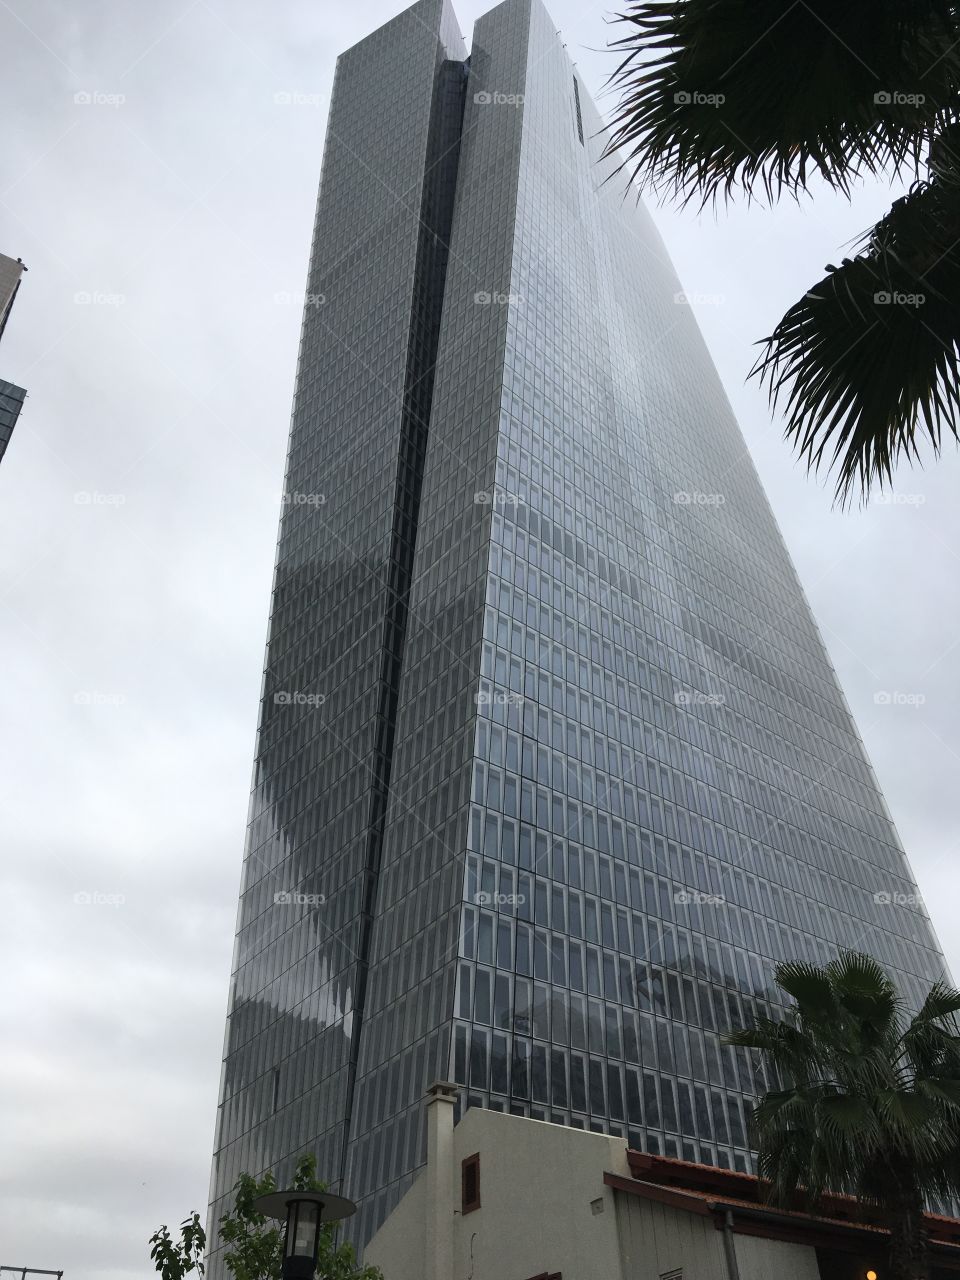 Tel aviv skyscraper 